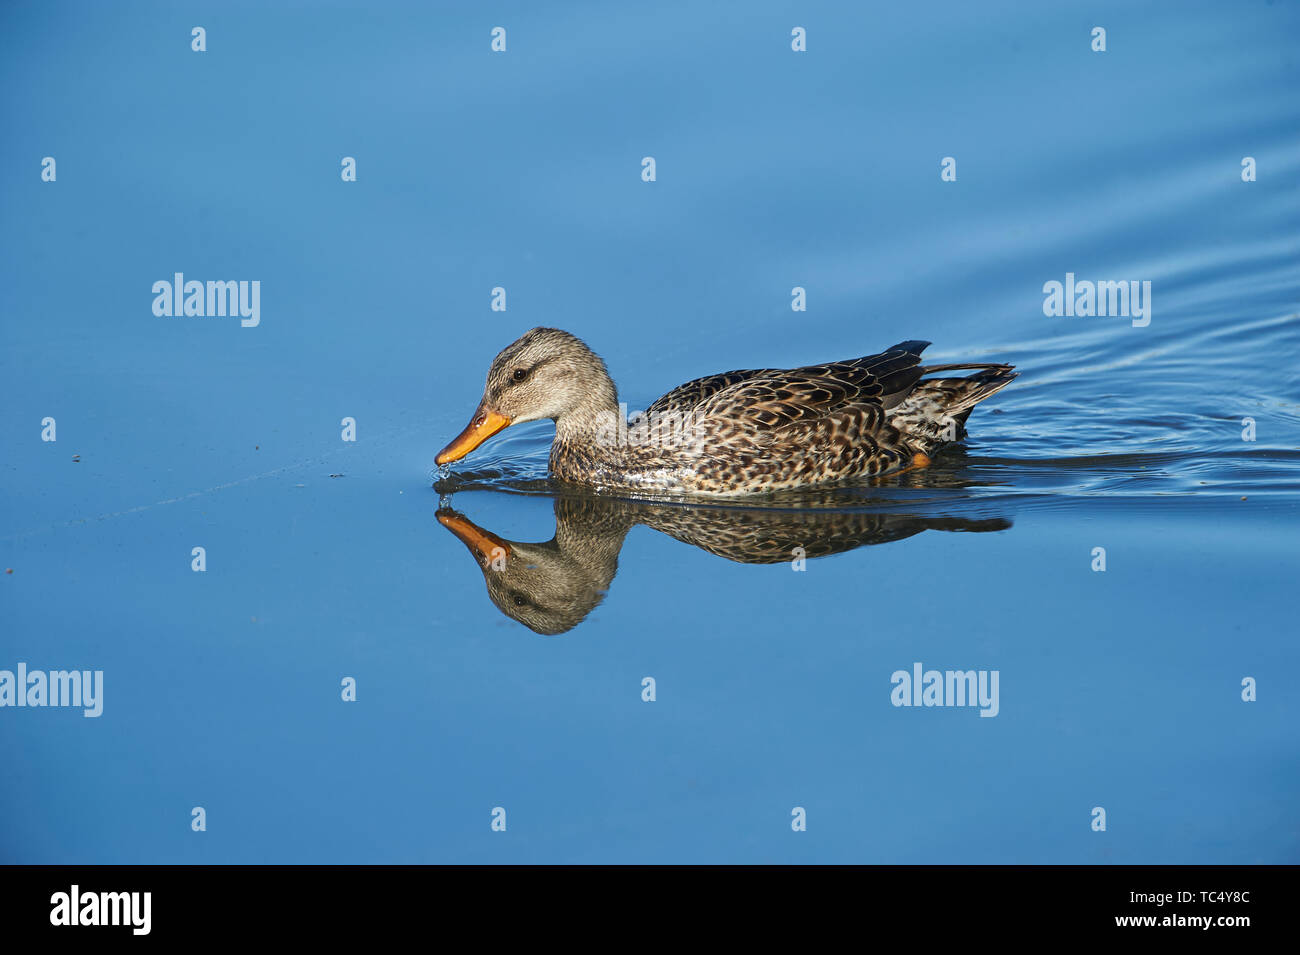 American Black Duck (Anas rubripes) swimming in the lake, Annapolis Royal Marsh, French Basin trail, Annapolis Royal, Nova Scotia, Canada, Stock Photo